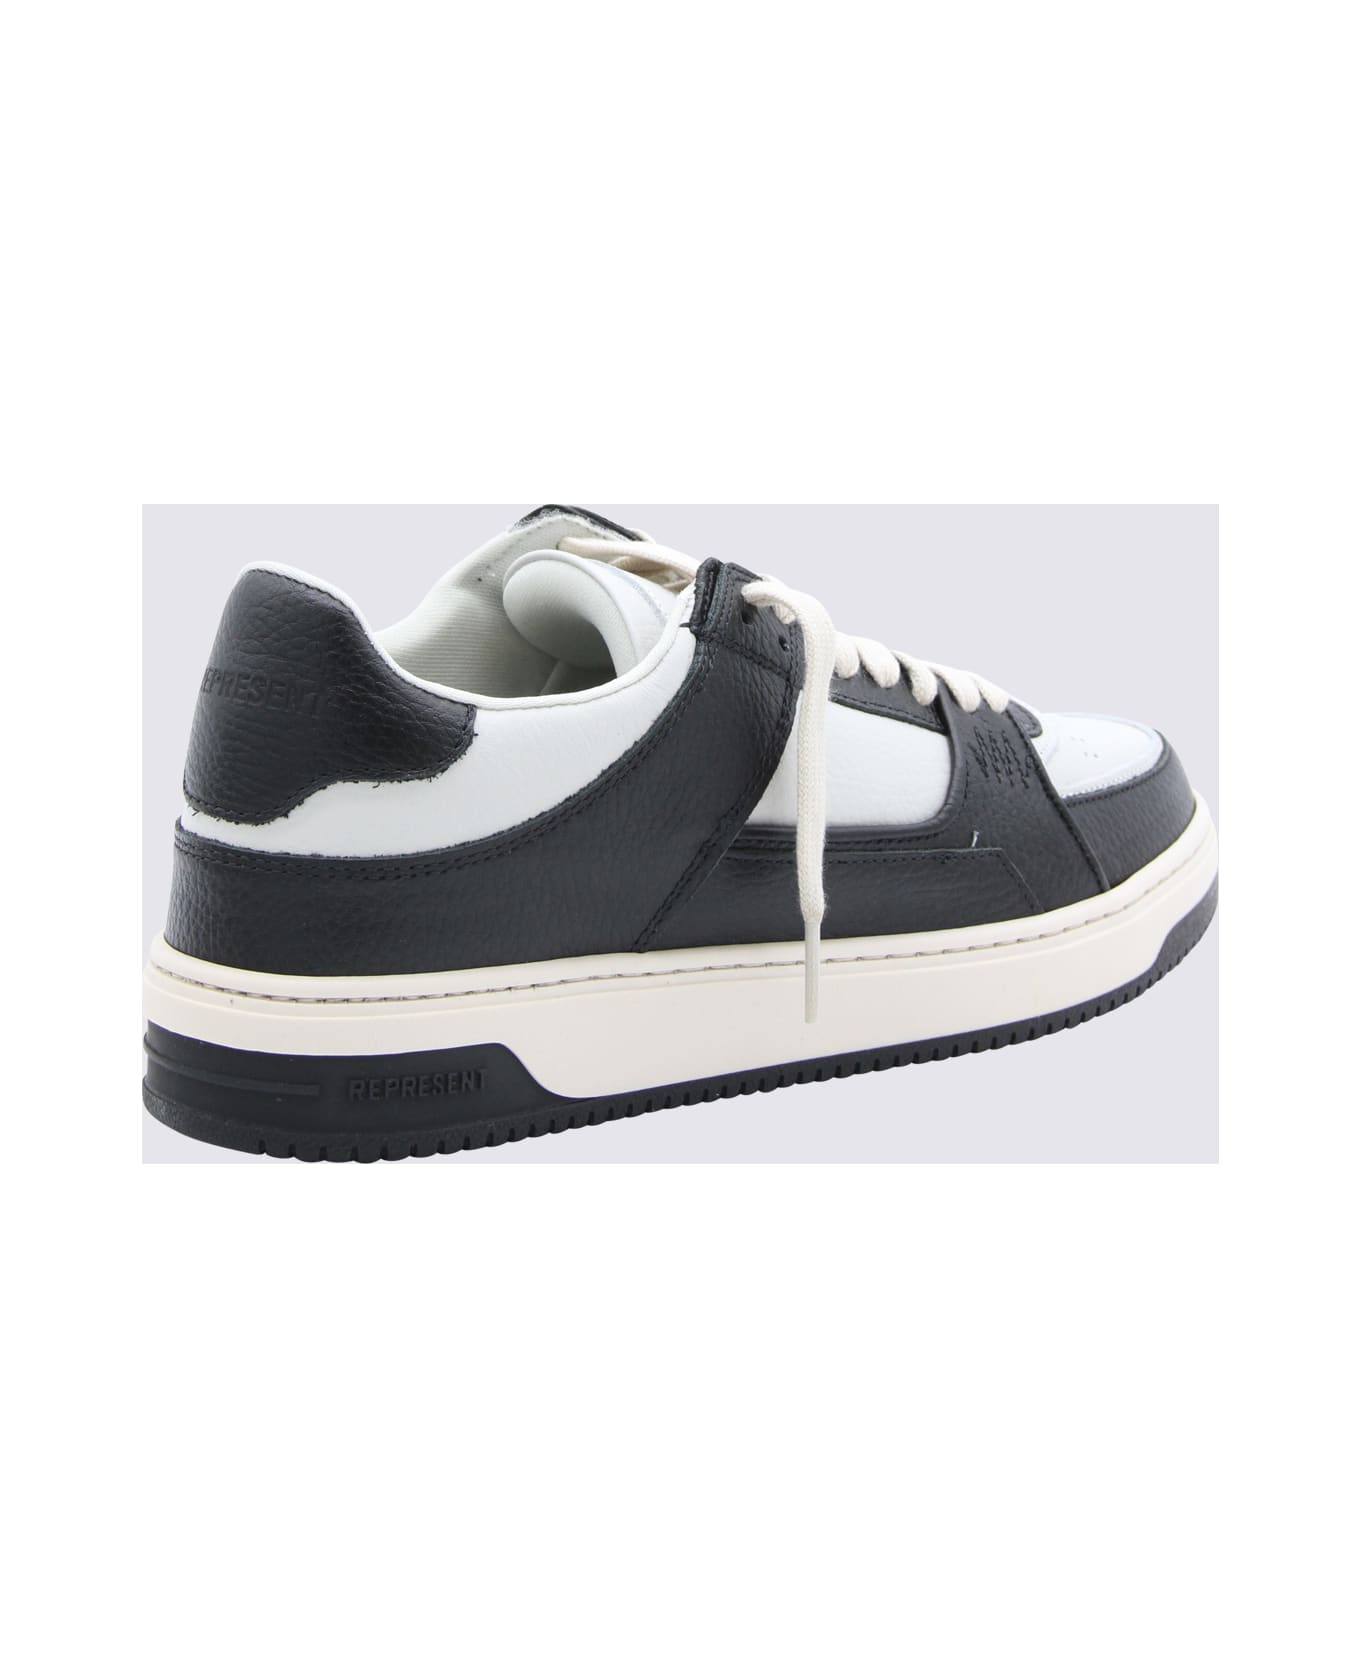 REPRESENT White And Black Leather Apex Sneakers - White